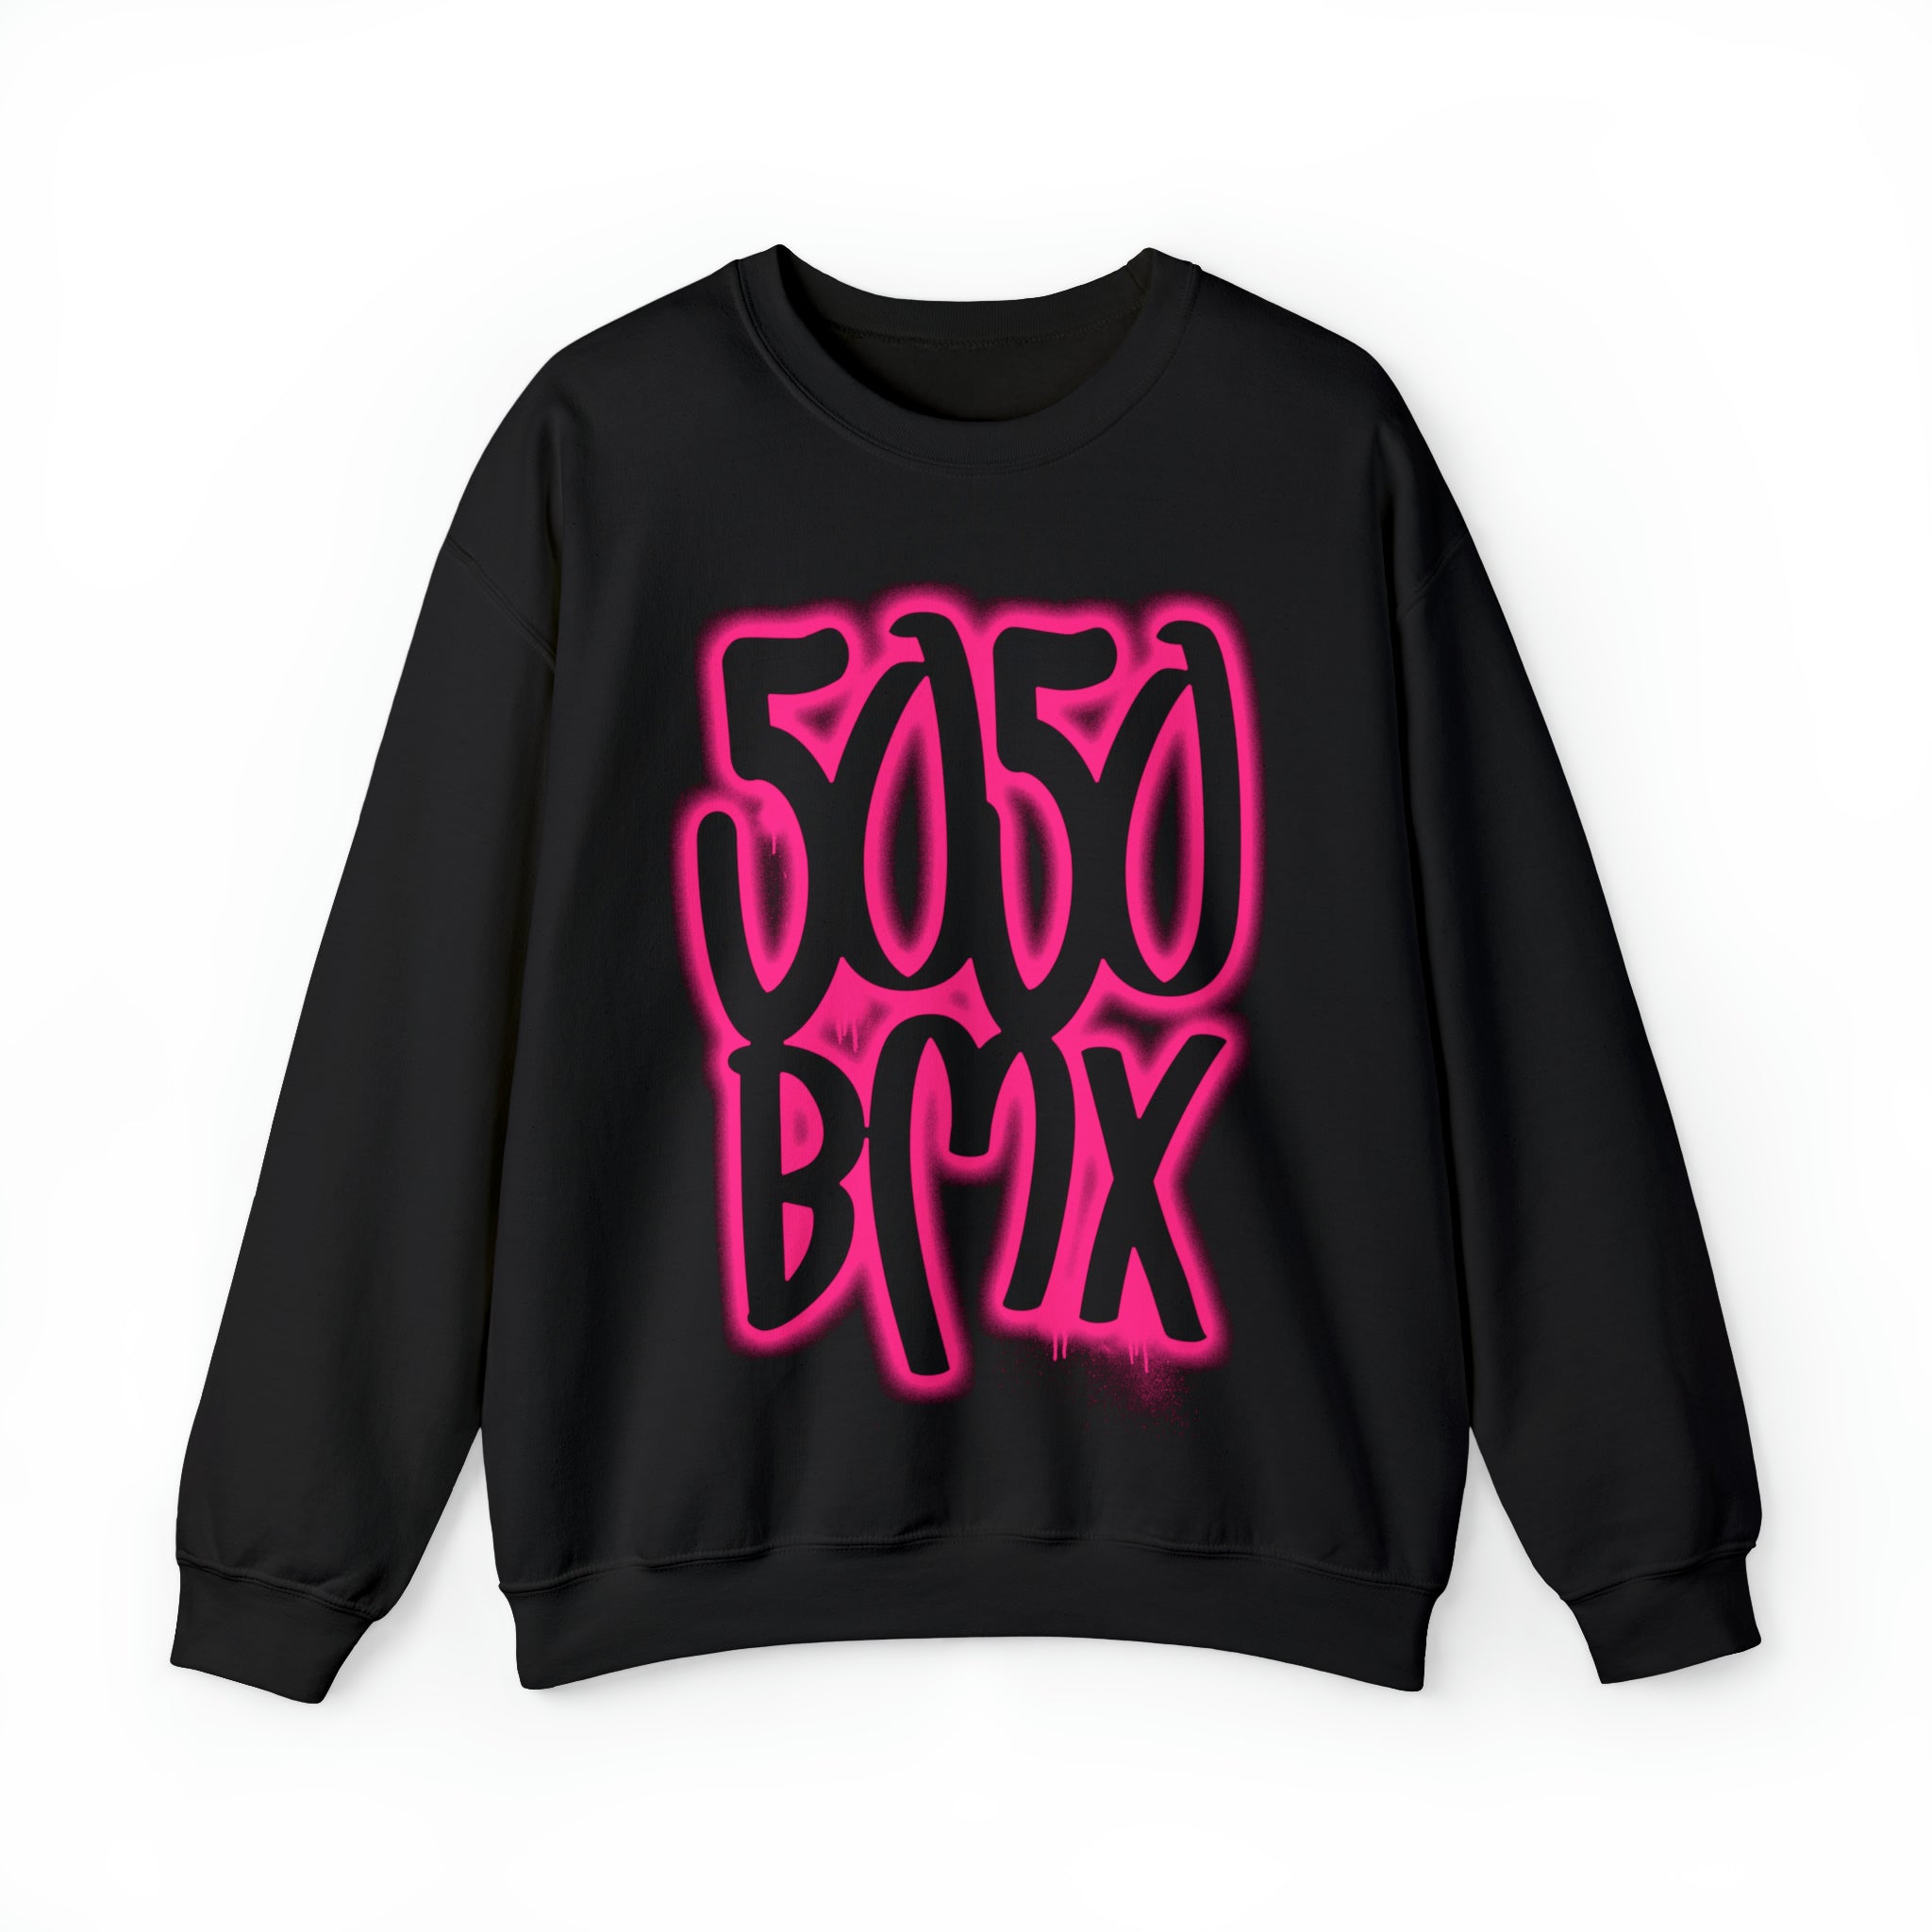 5050bmx Graffiti Crewneck Sweatshirt (Pink)